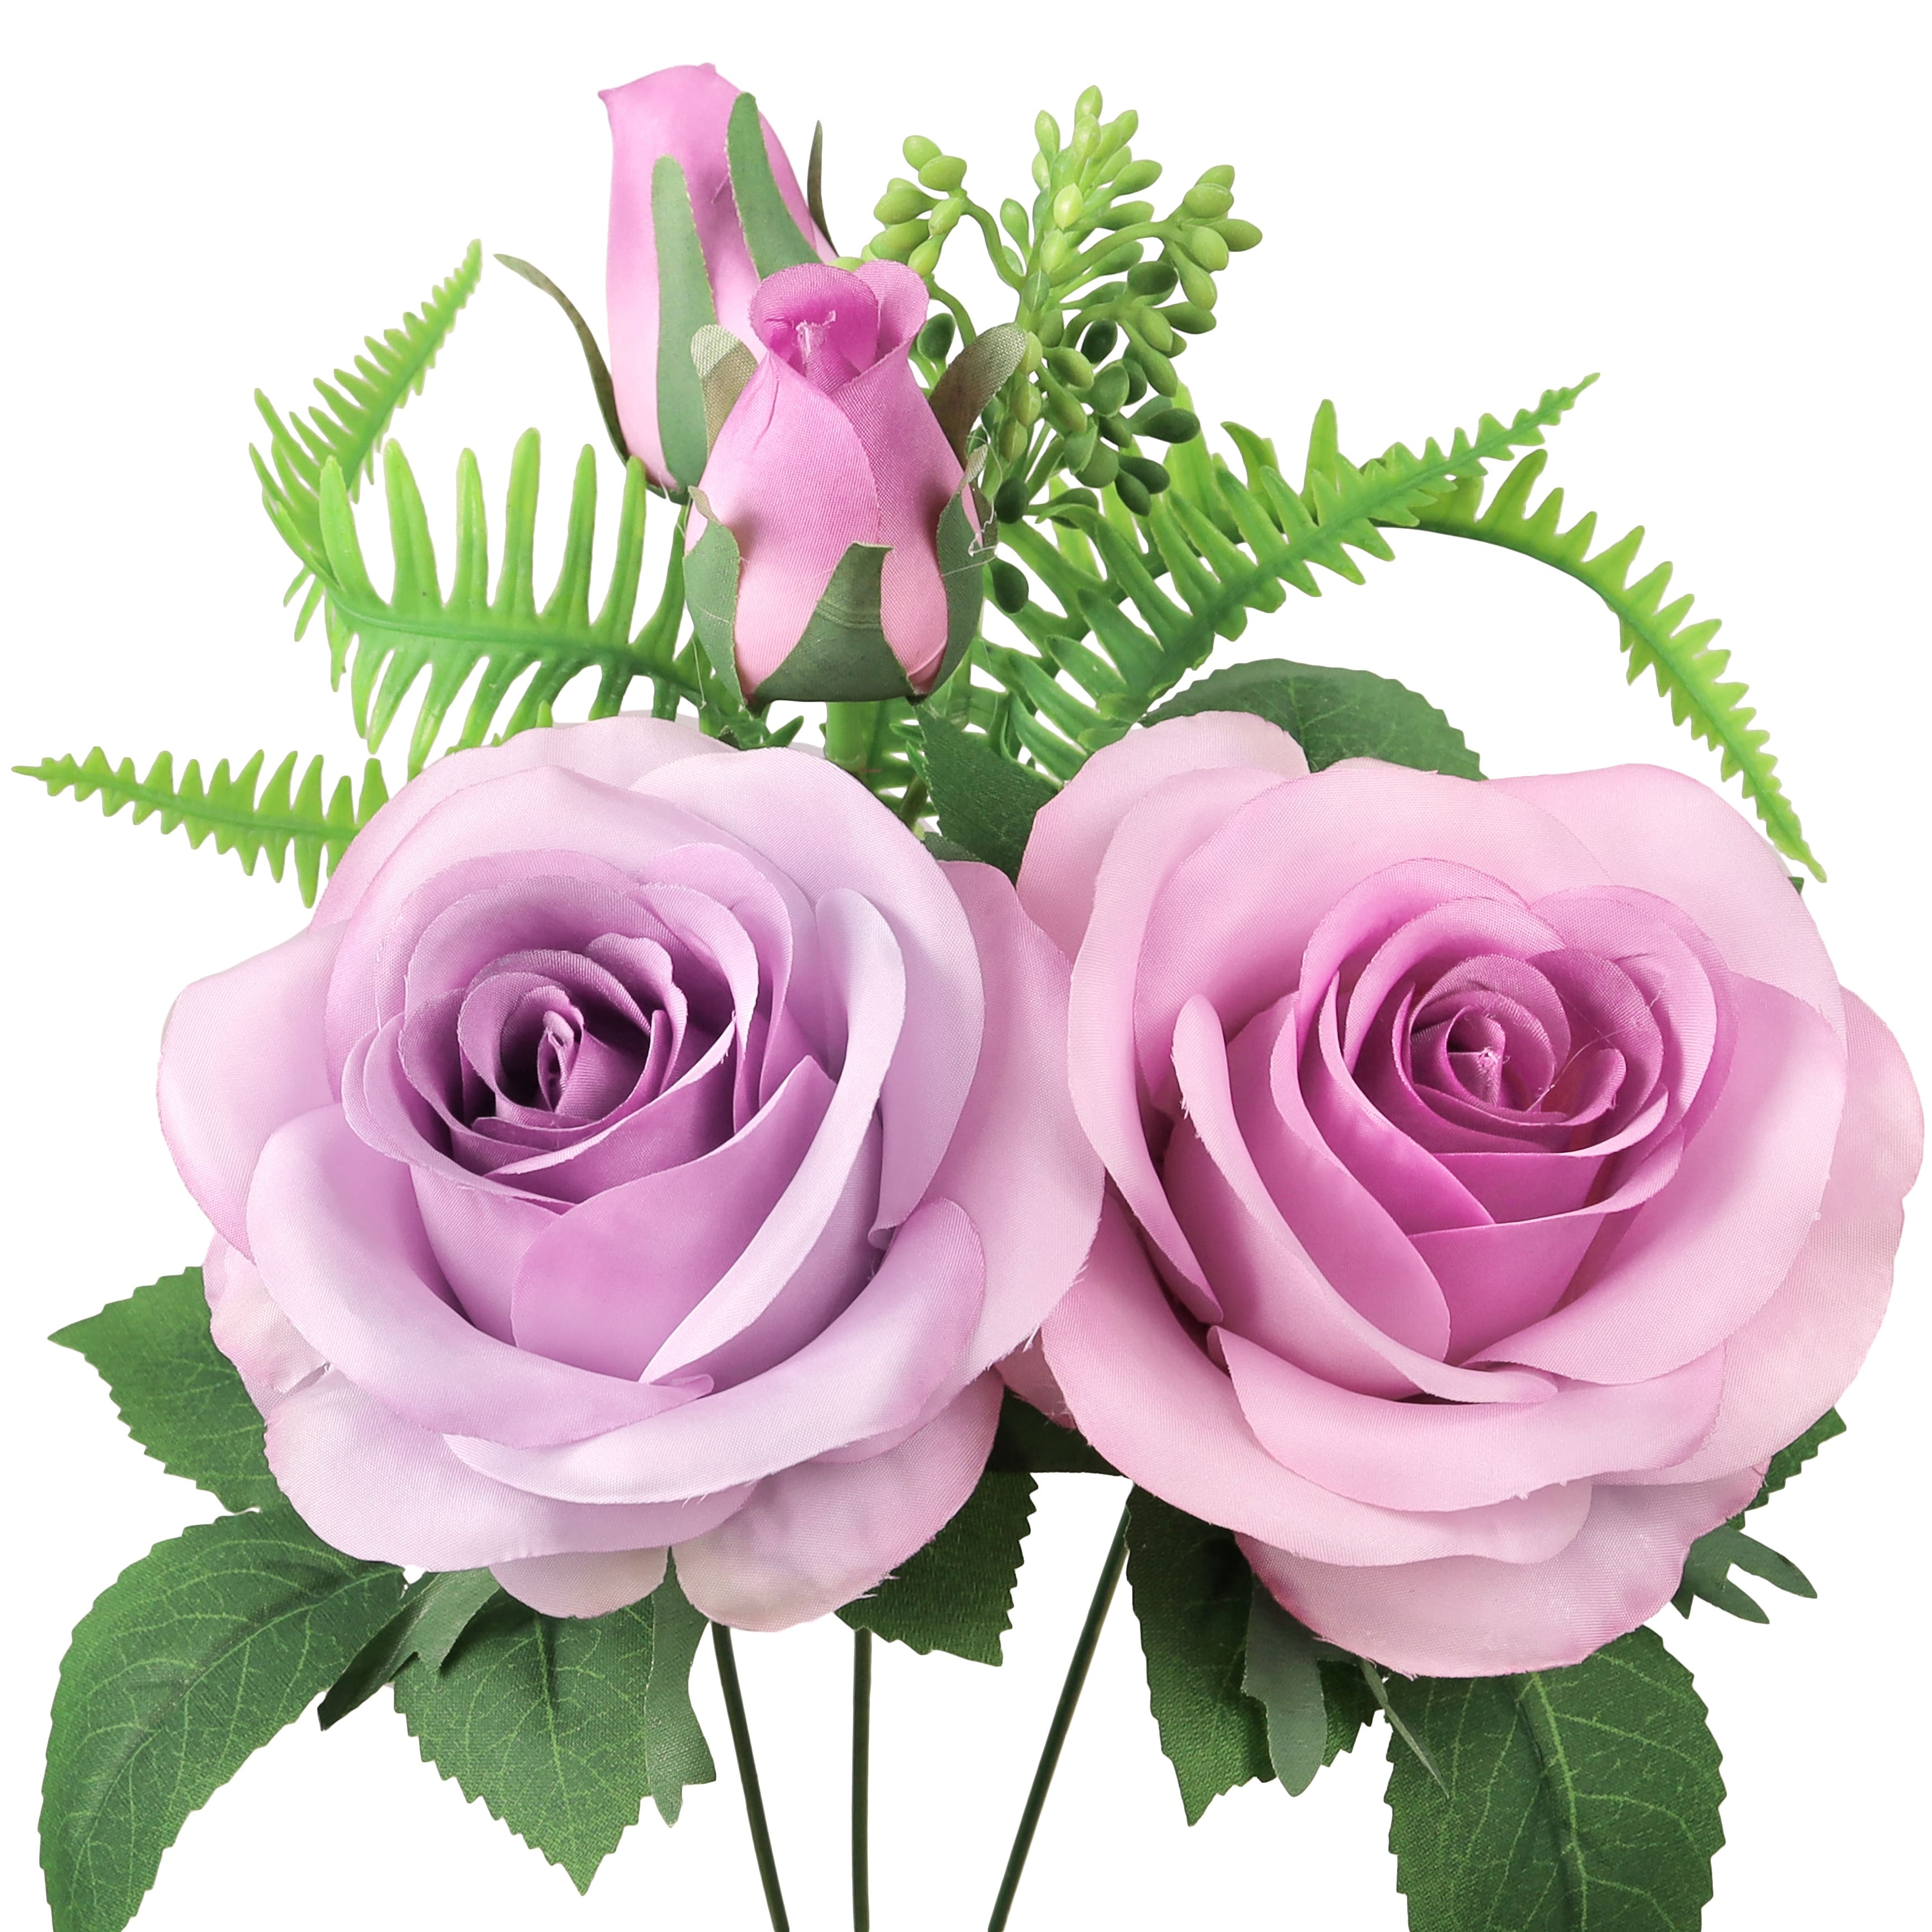 Set of 2 Lavender Artificial Rose Flower Stem Bush Bouquet 18in - 18